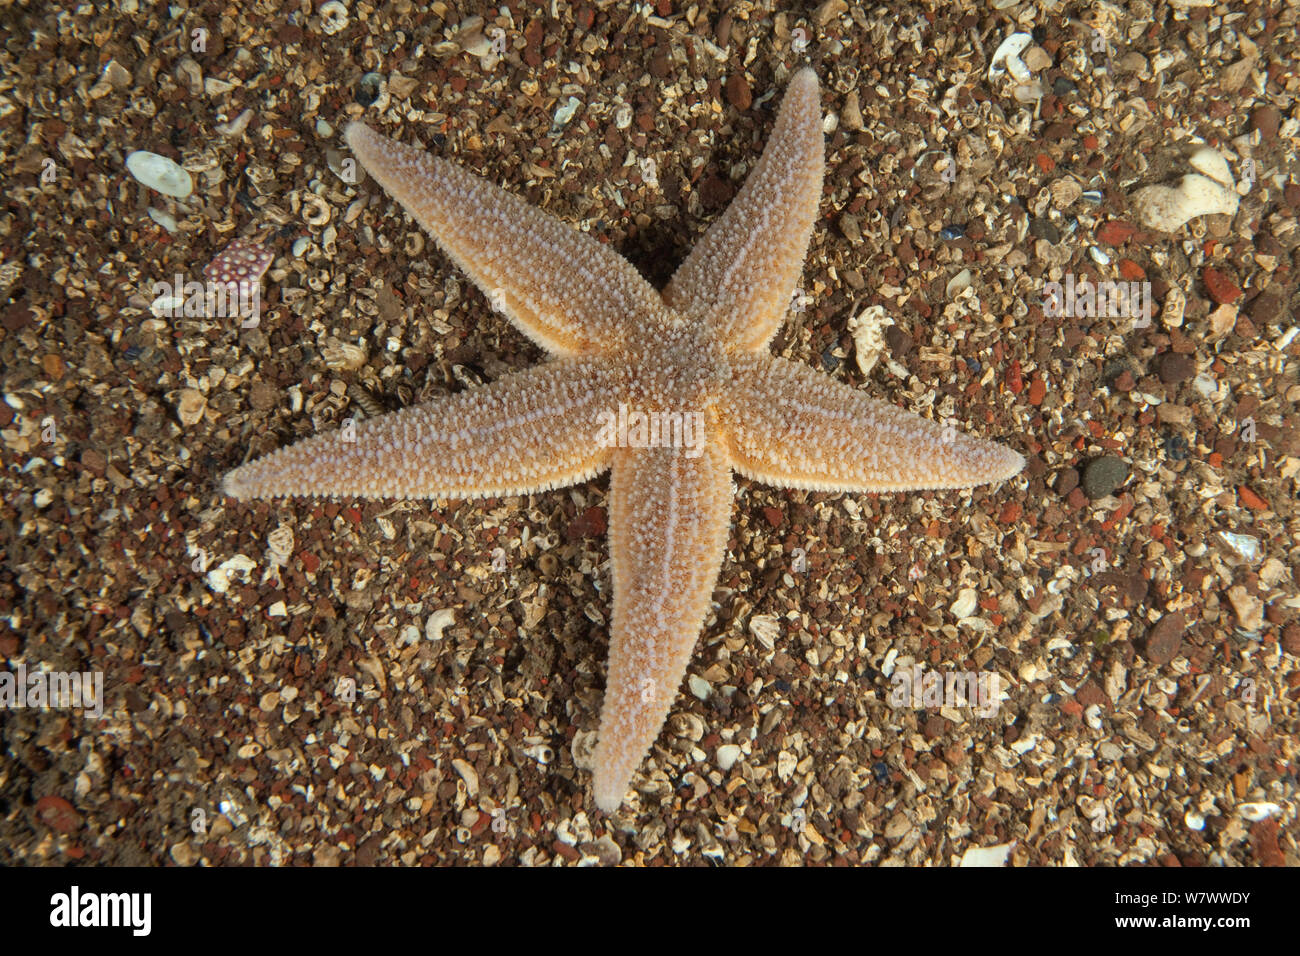 Common starfish (Asterias rubens) St Abbs Voluntary Marine Reserve, Scotland (North Sea). Stock Photo